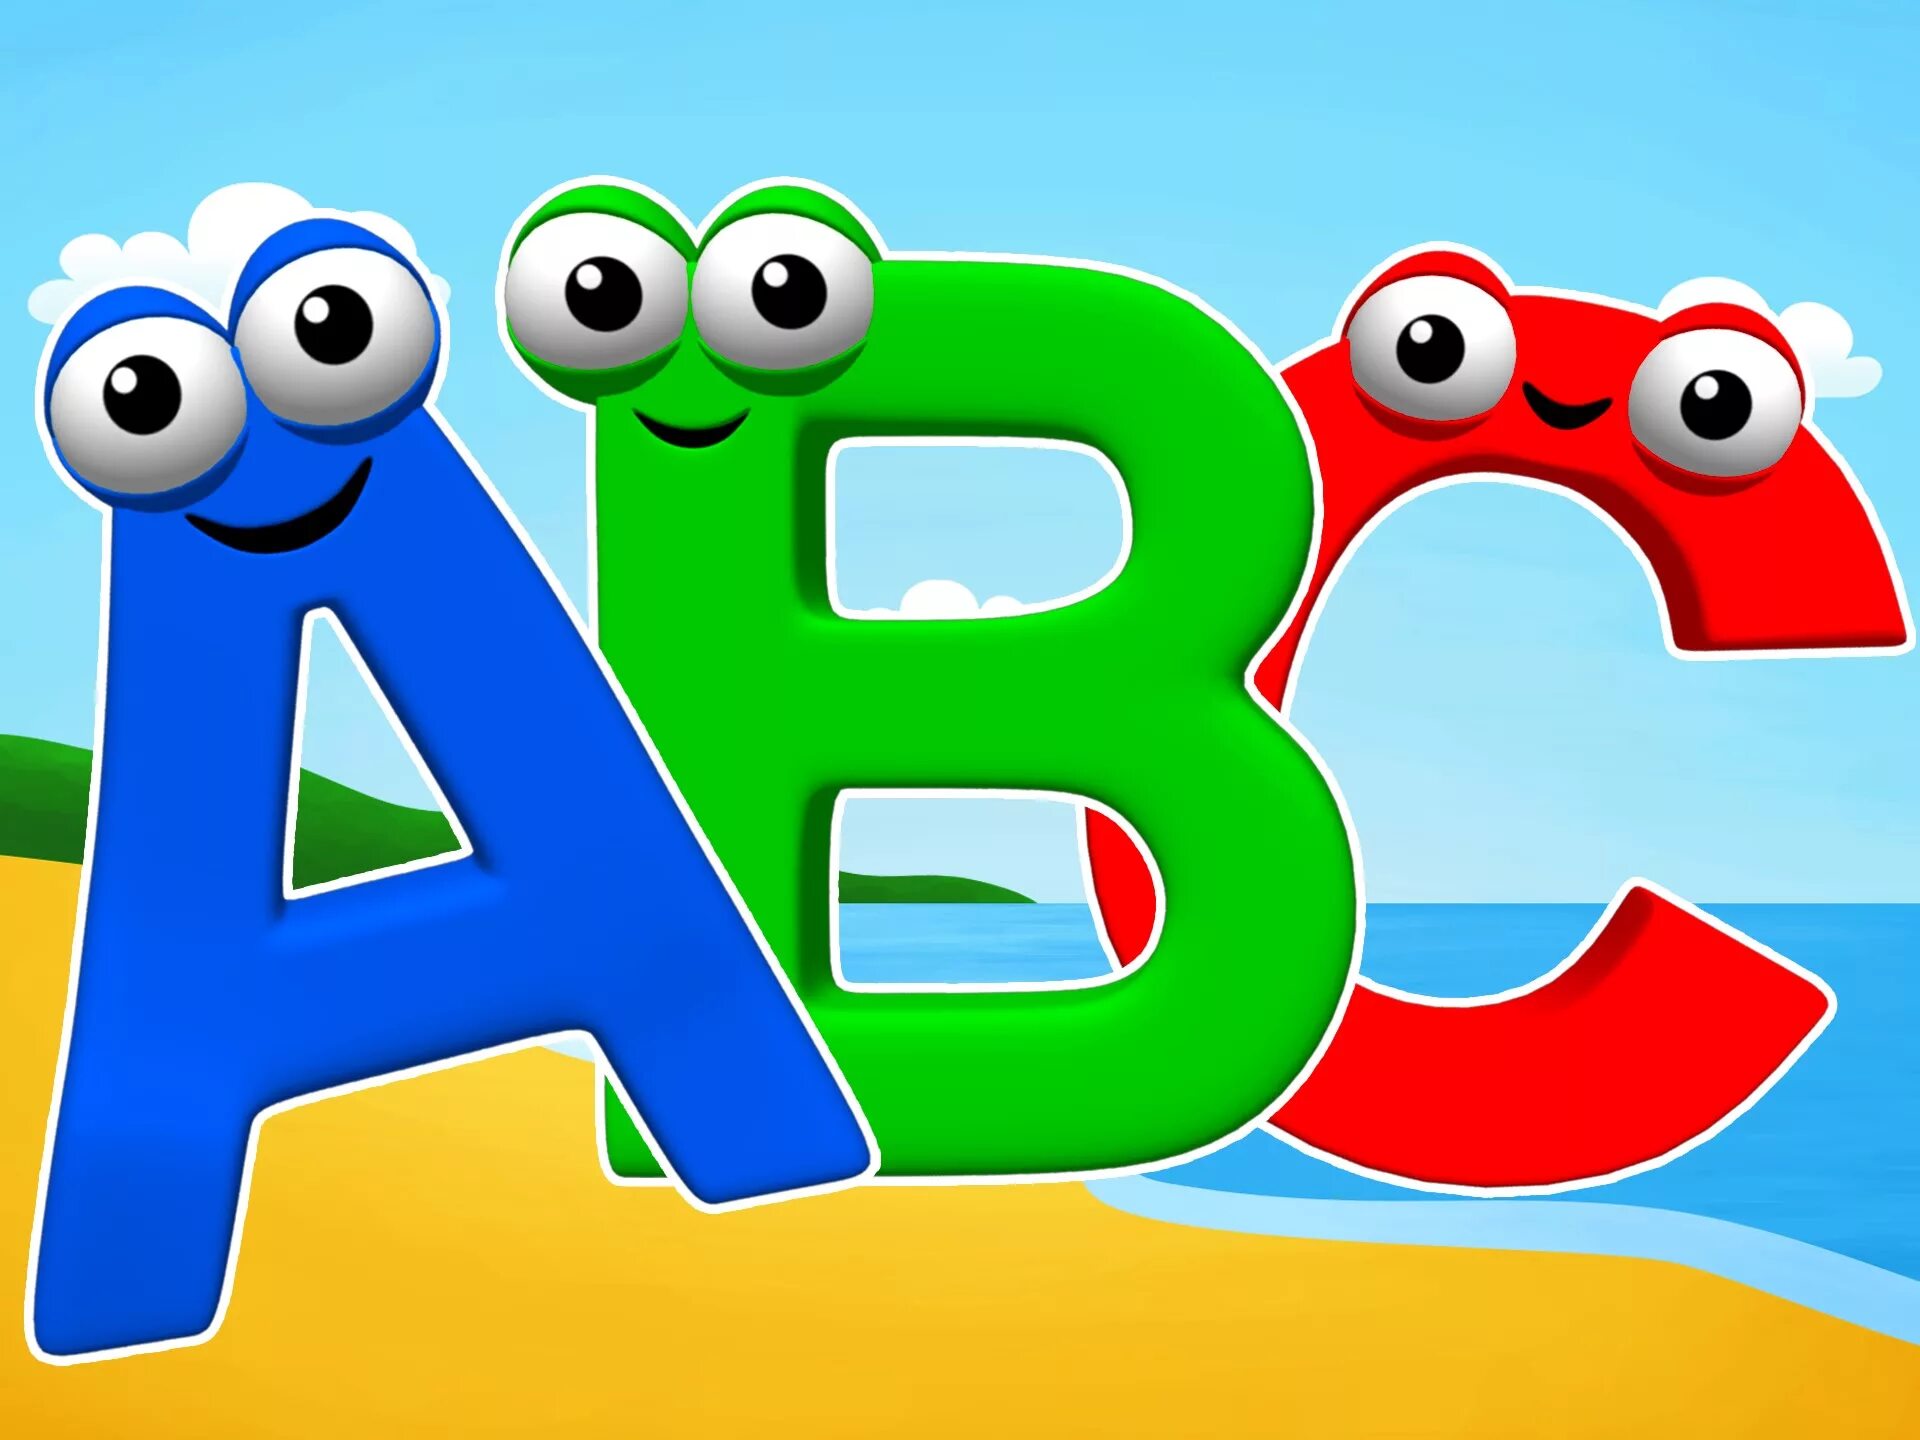 Веселая английская музыка. ABC. Буквы алфавита для детей. Английские буквы для детей. ABC алфавит.